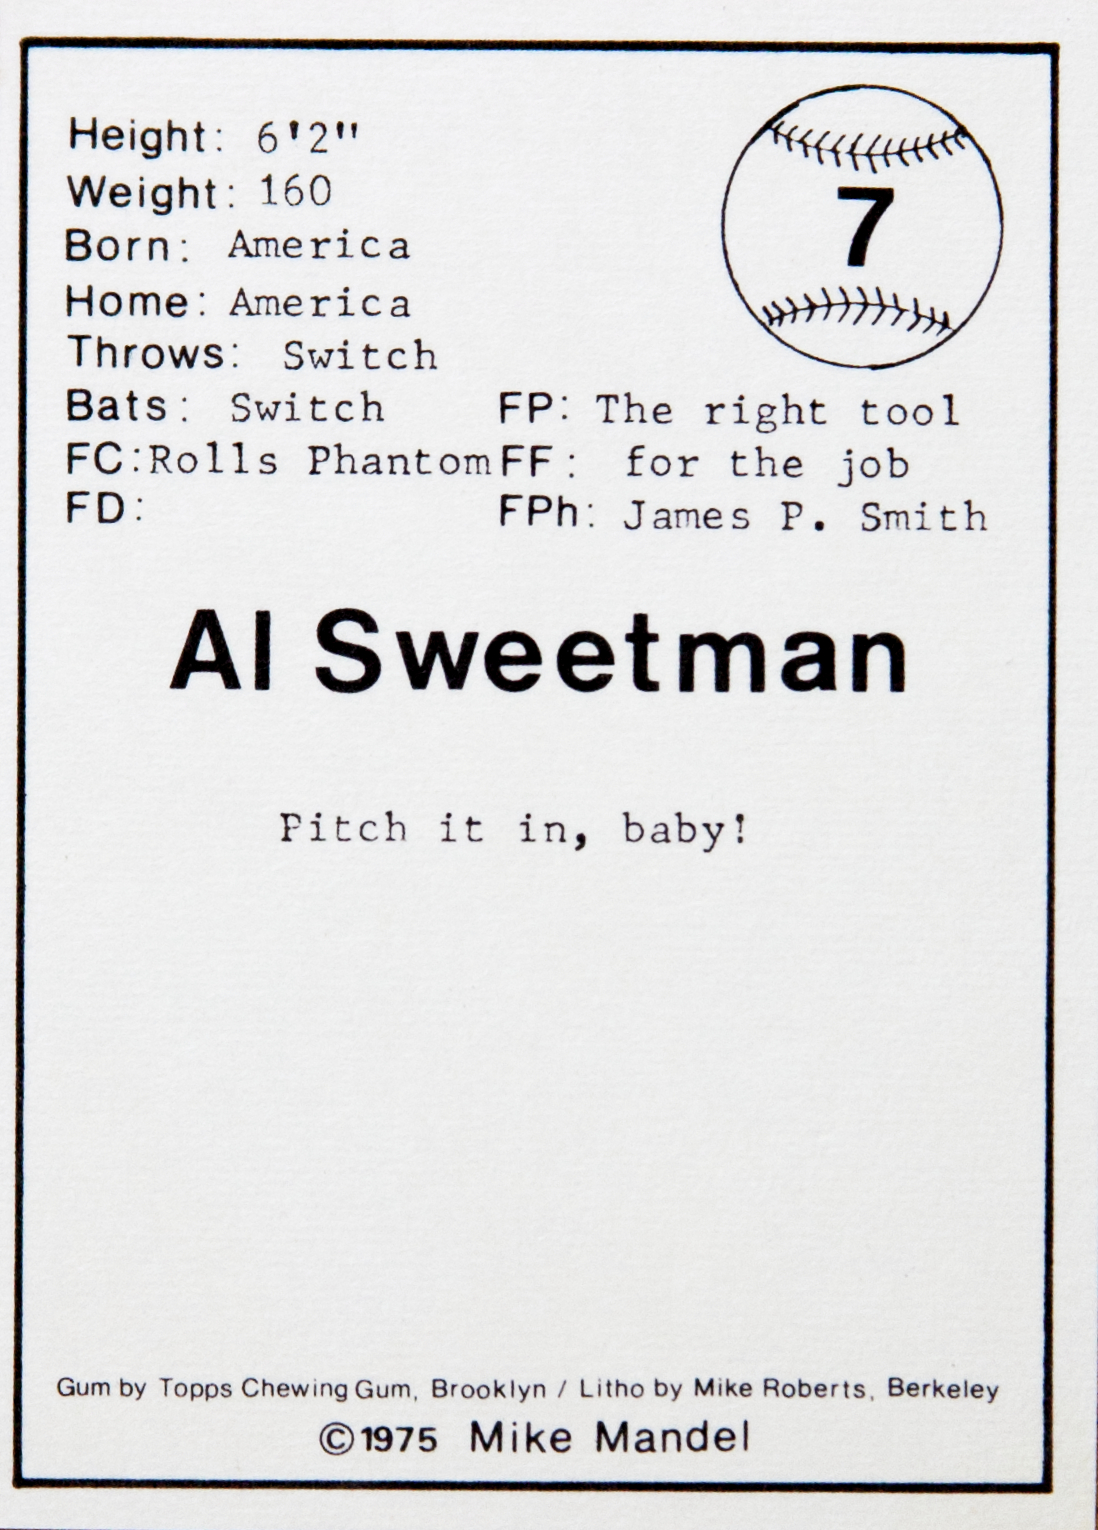 Al Sweetman